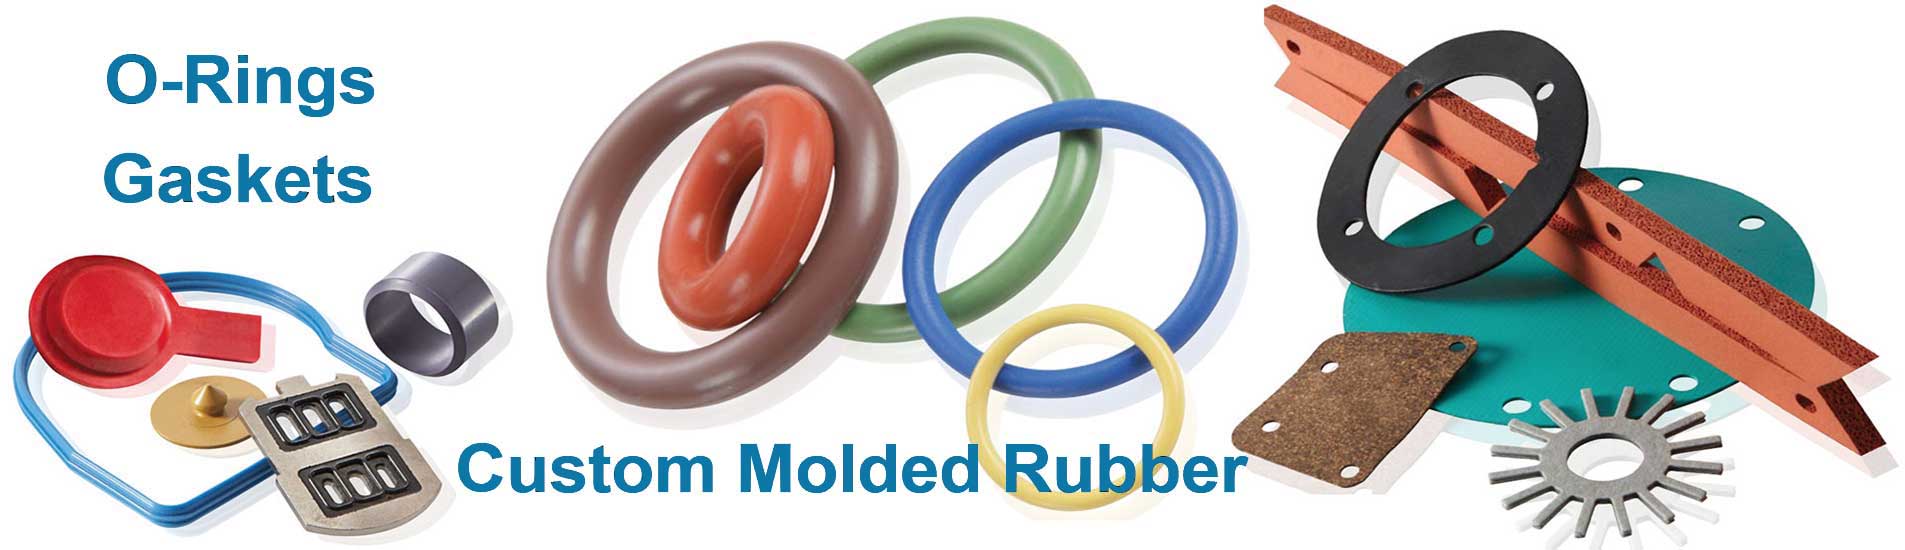 O-Rings, Gaskets, & Custom Molded Rubber